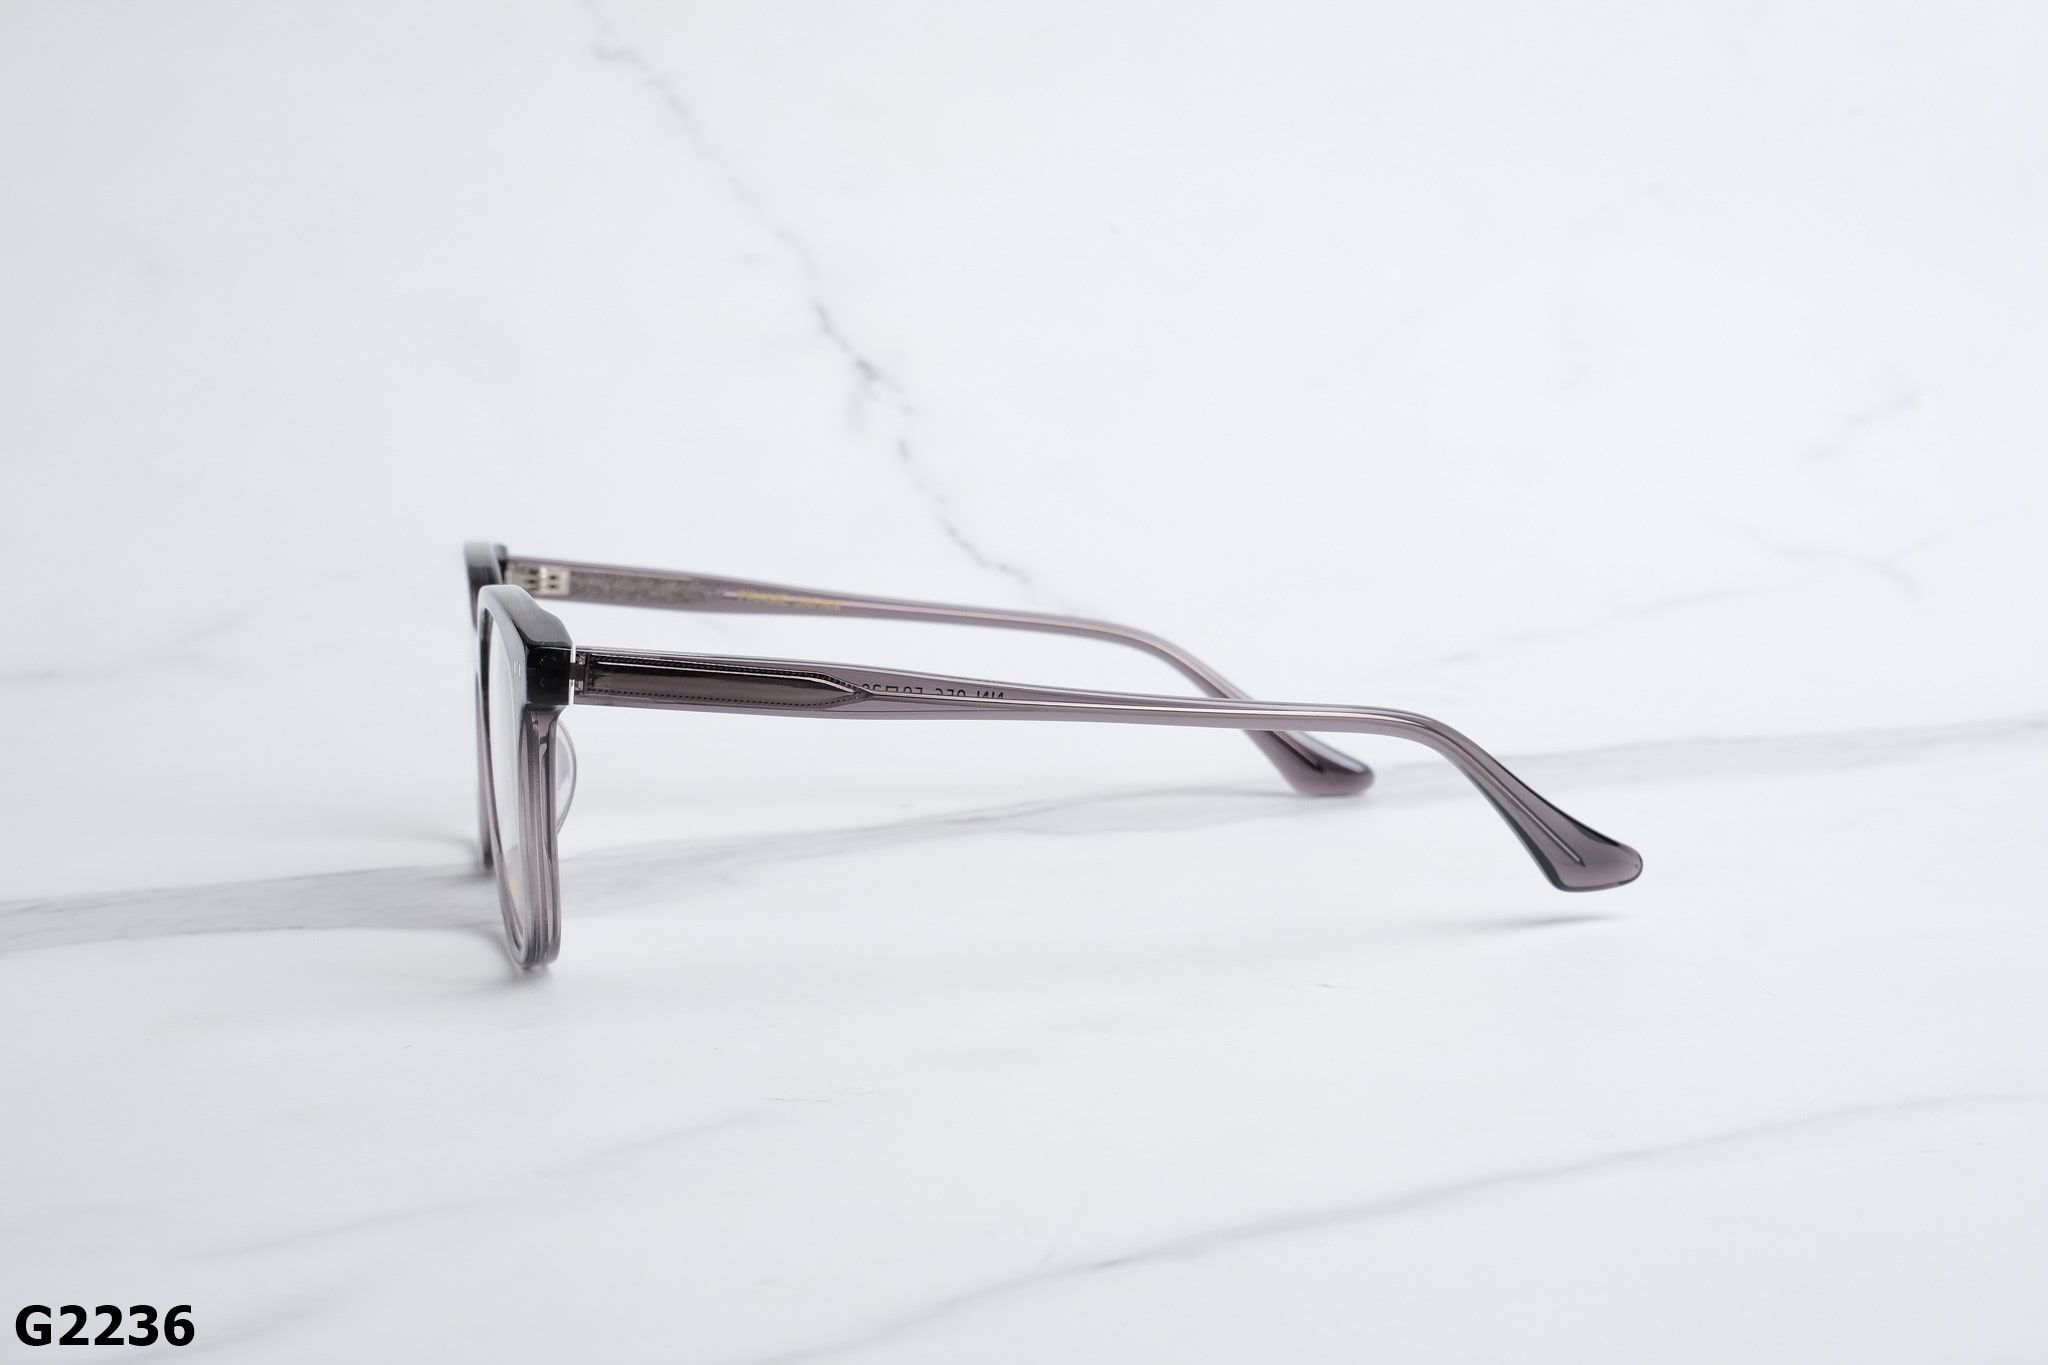  SHADY Eyewear - Glasses - G2236 